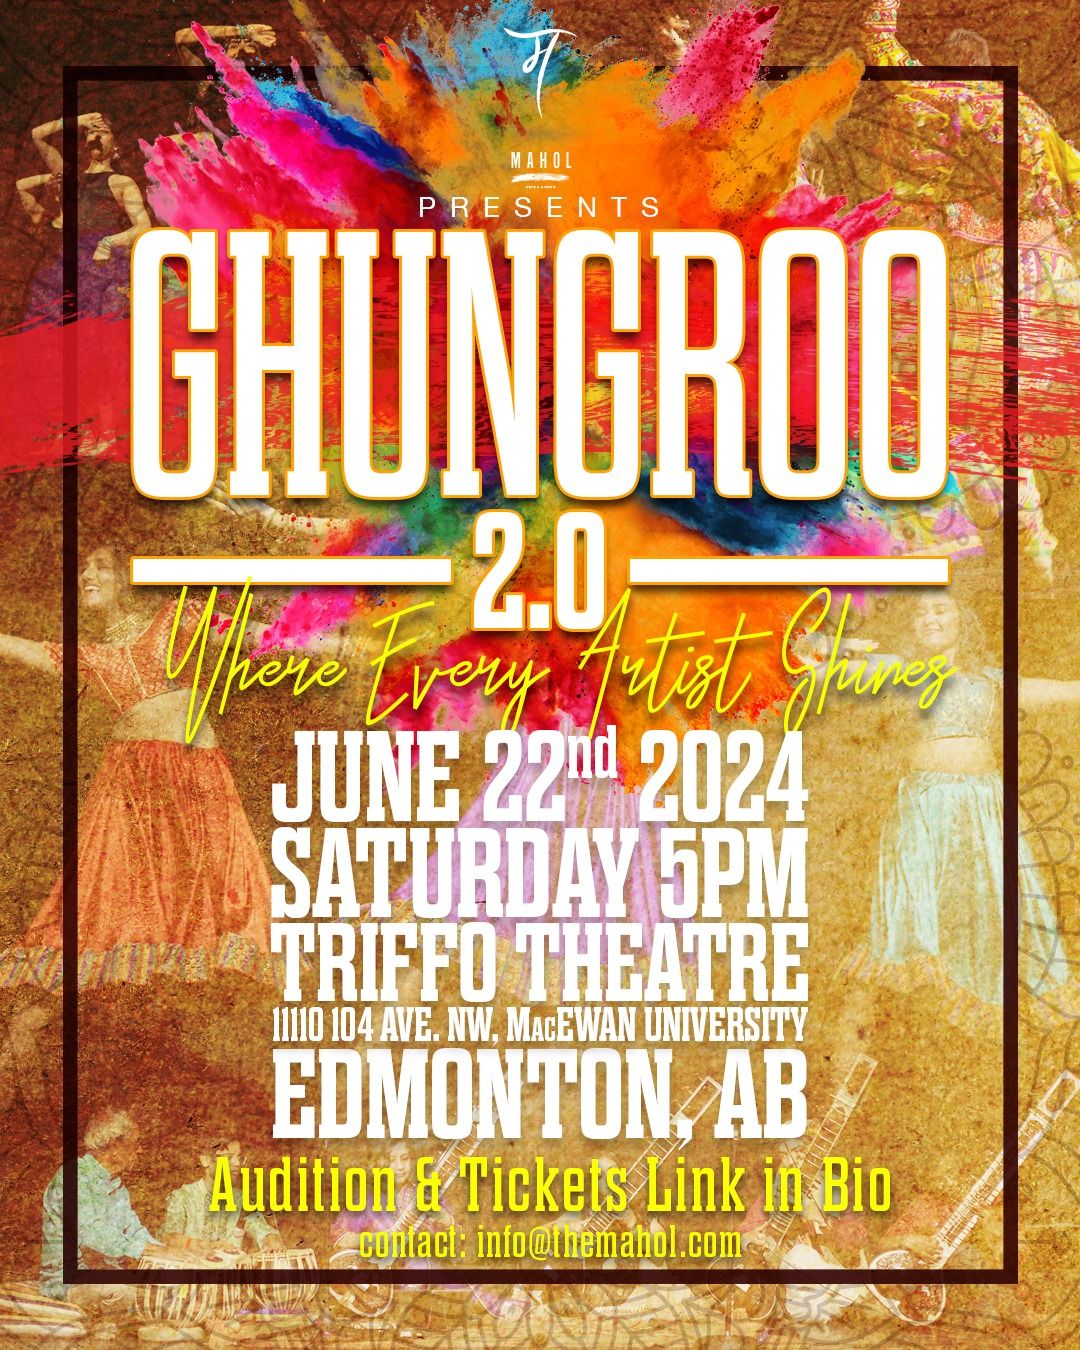 Ghungroo 2.0 | Where every artist shines